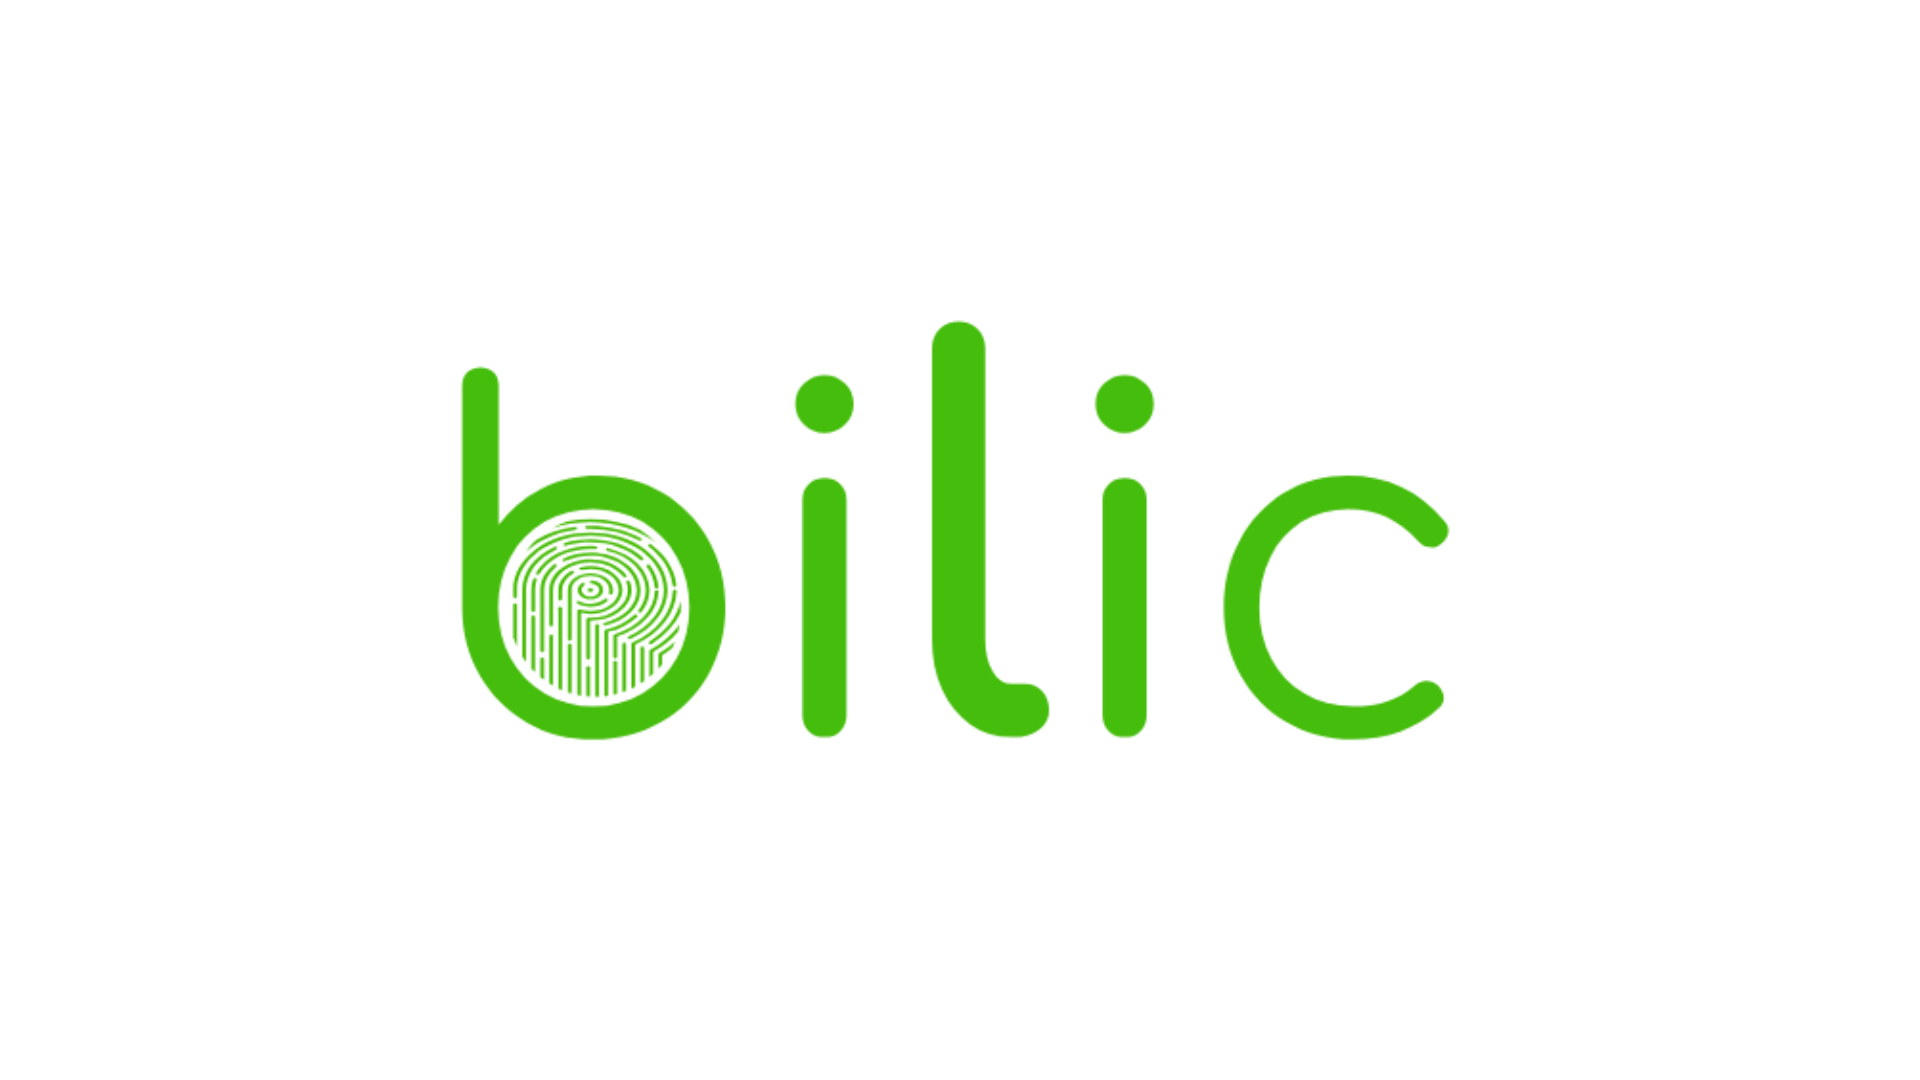 Bilic Logo, Partners of The Cyber Escape Room Co.